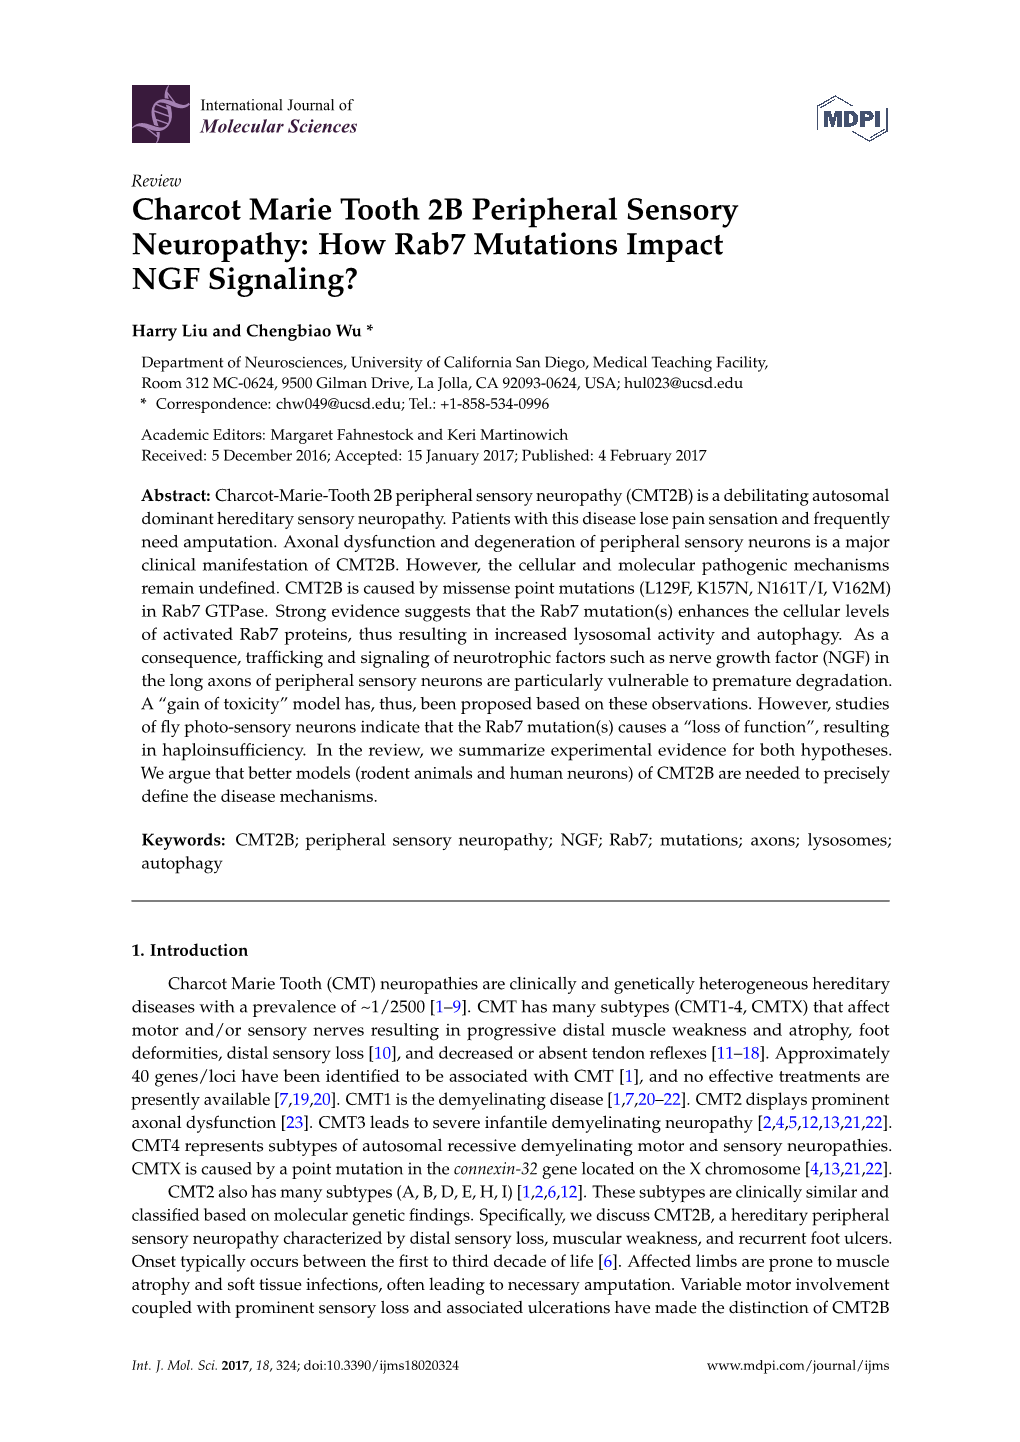 Charcot Marie Tooth 2B Peripheral Sensory Neuropathy: How Rab7 Mutations Impact NGF Signaling?